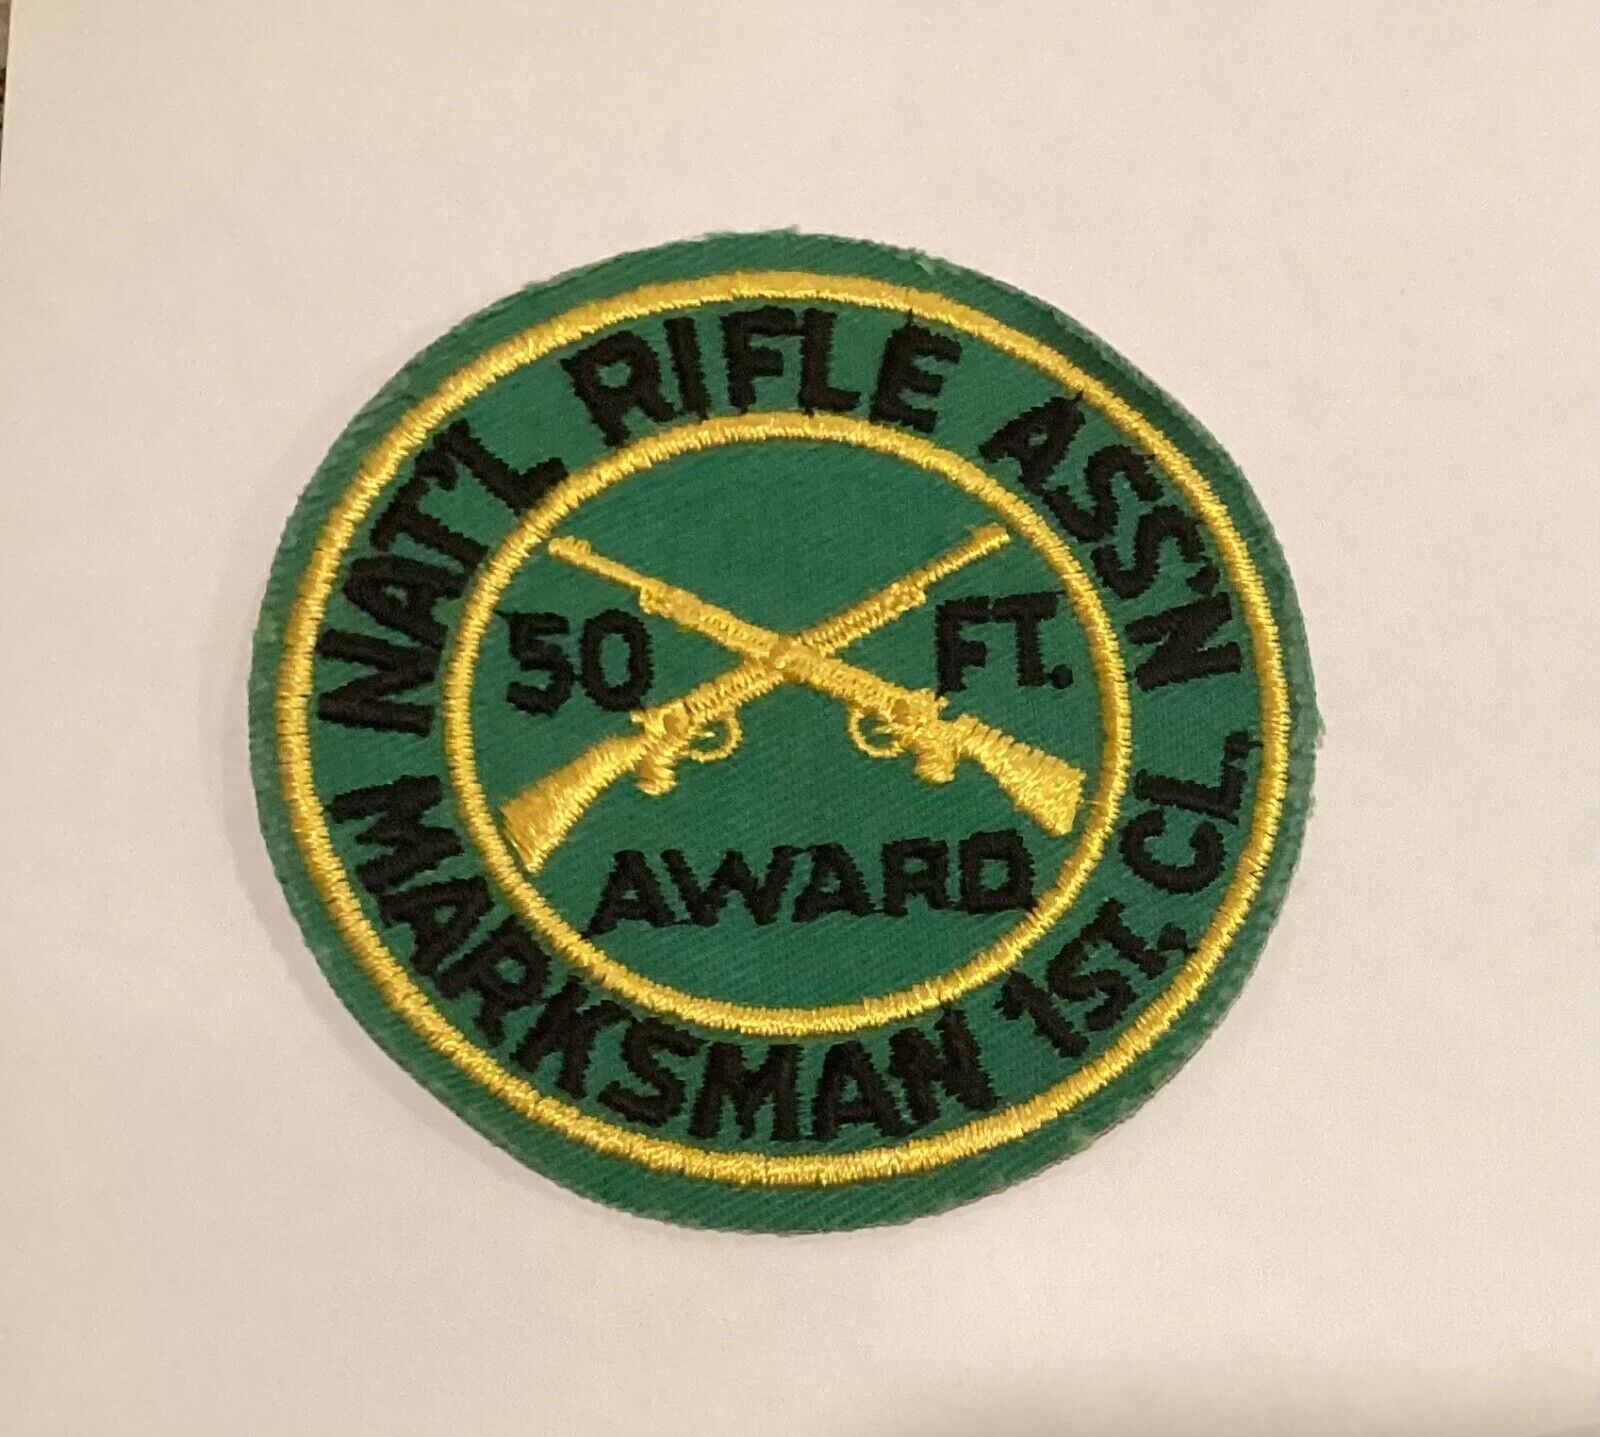 RNA National Rifle Association 1st Class Award Patch V3